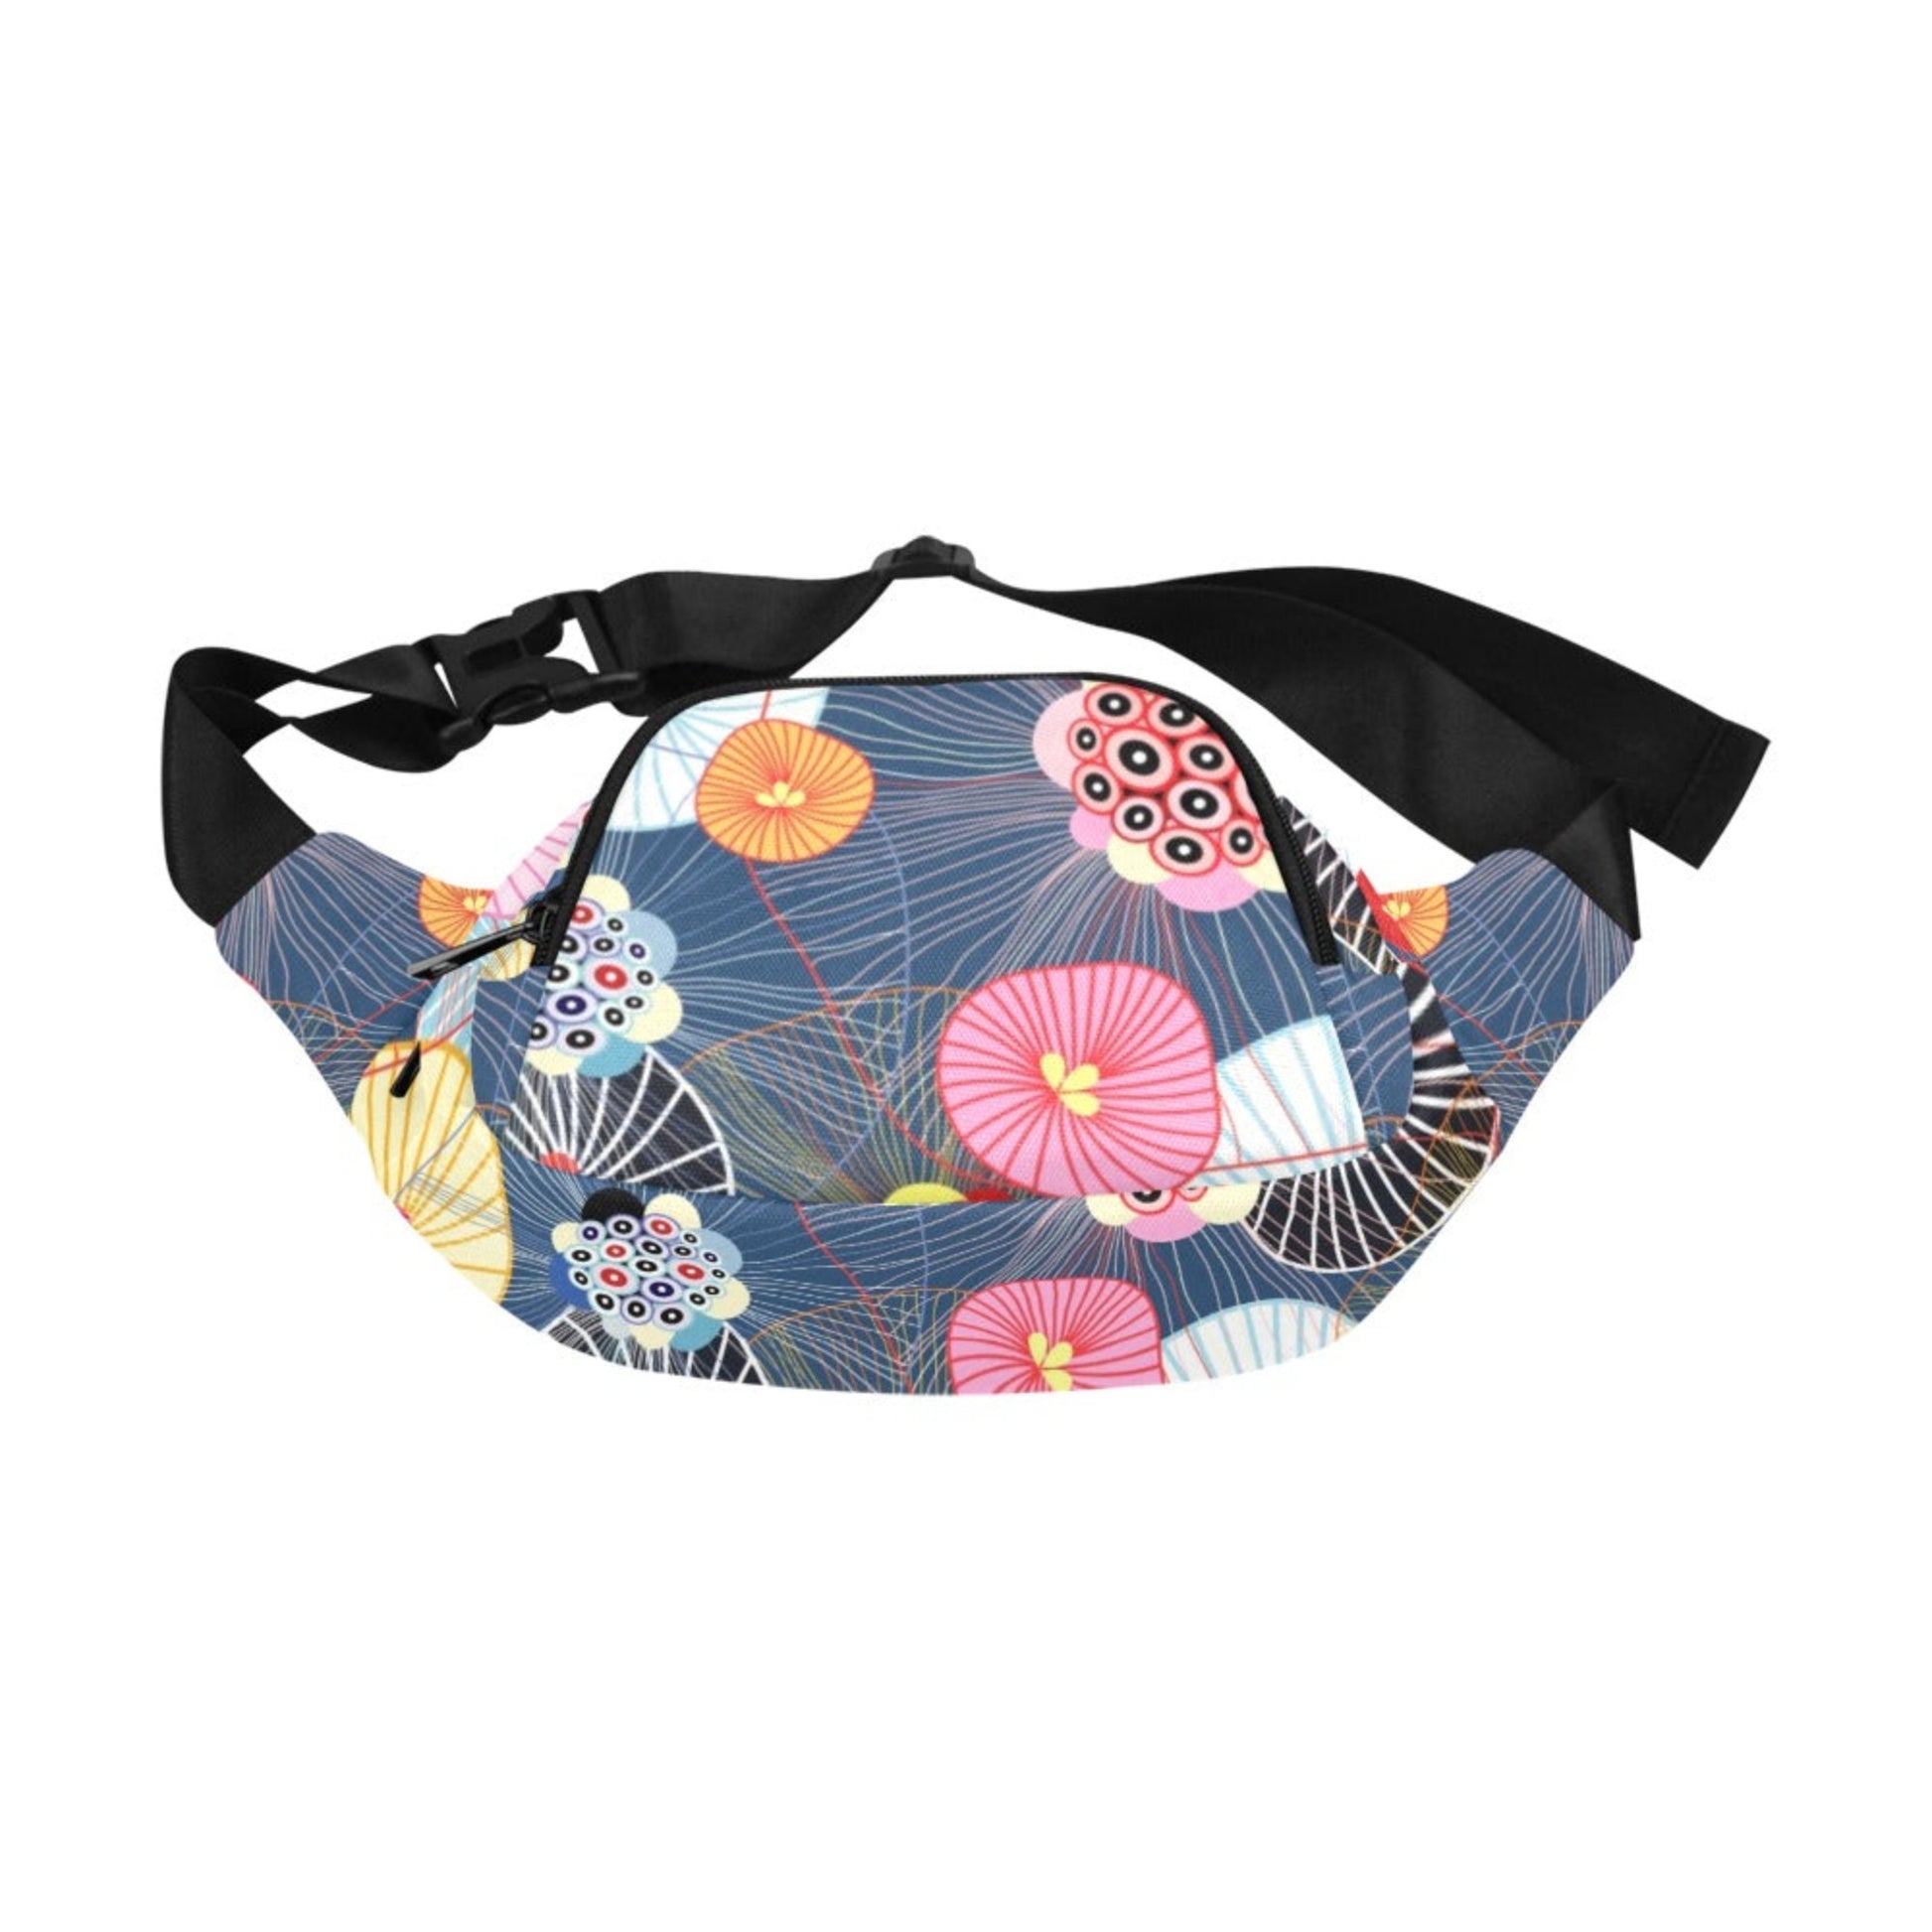 Abstract Floral - Bum Bag / Fanny Pack Bum Bag